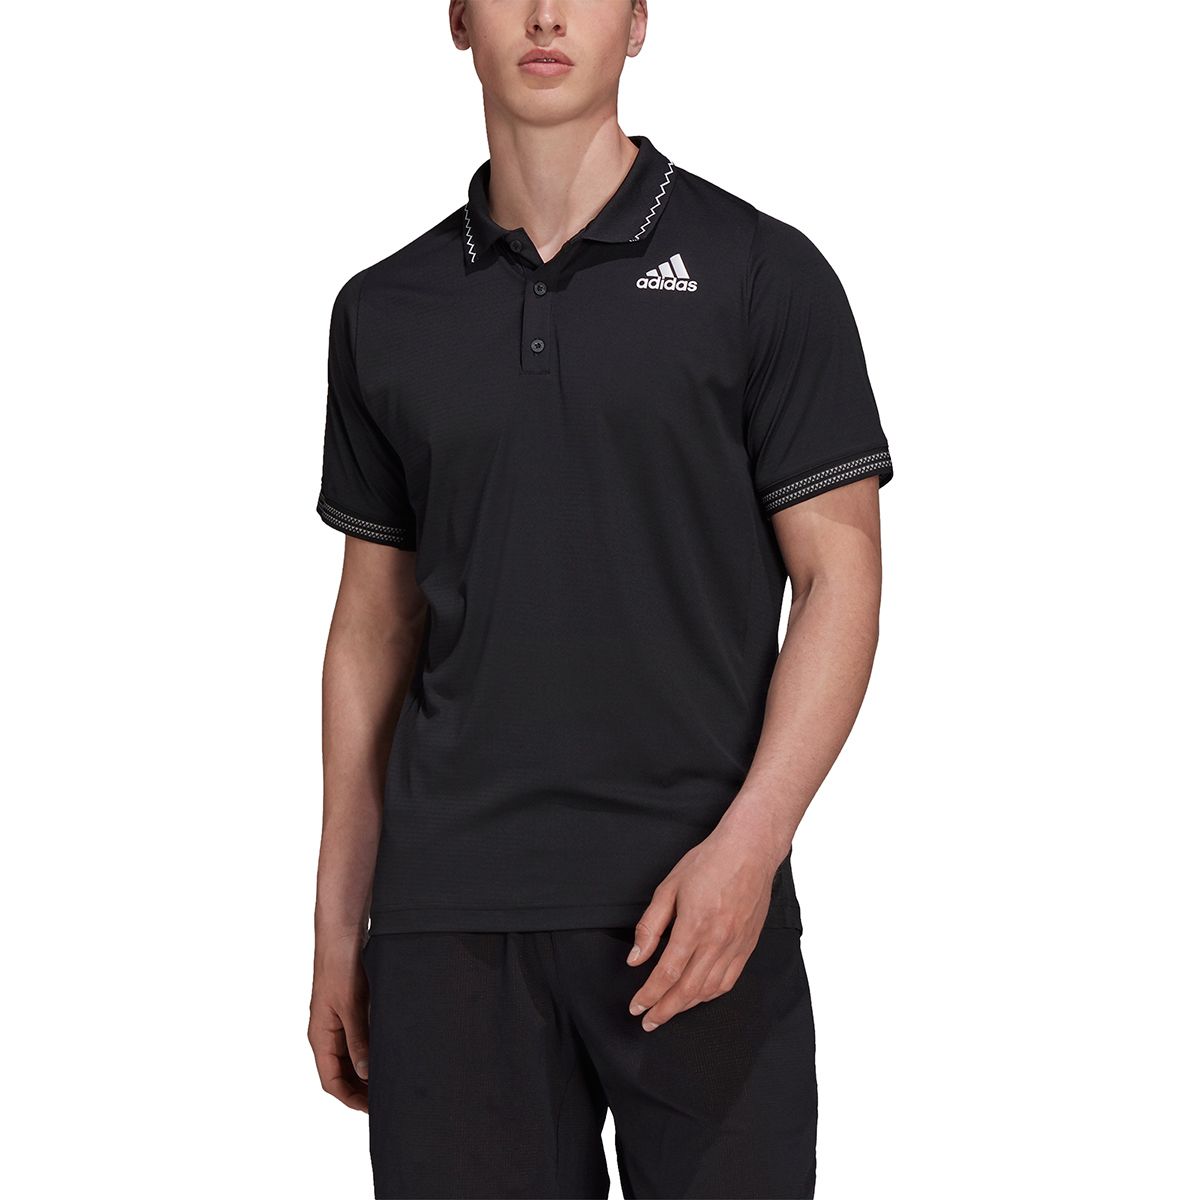 adidas Tennis Freelift Primeblue Men's Polo Shirt H50264